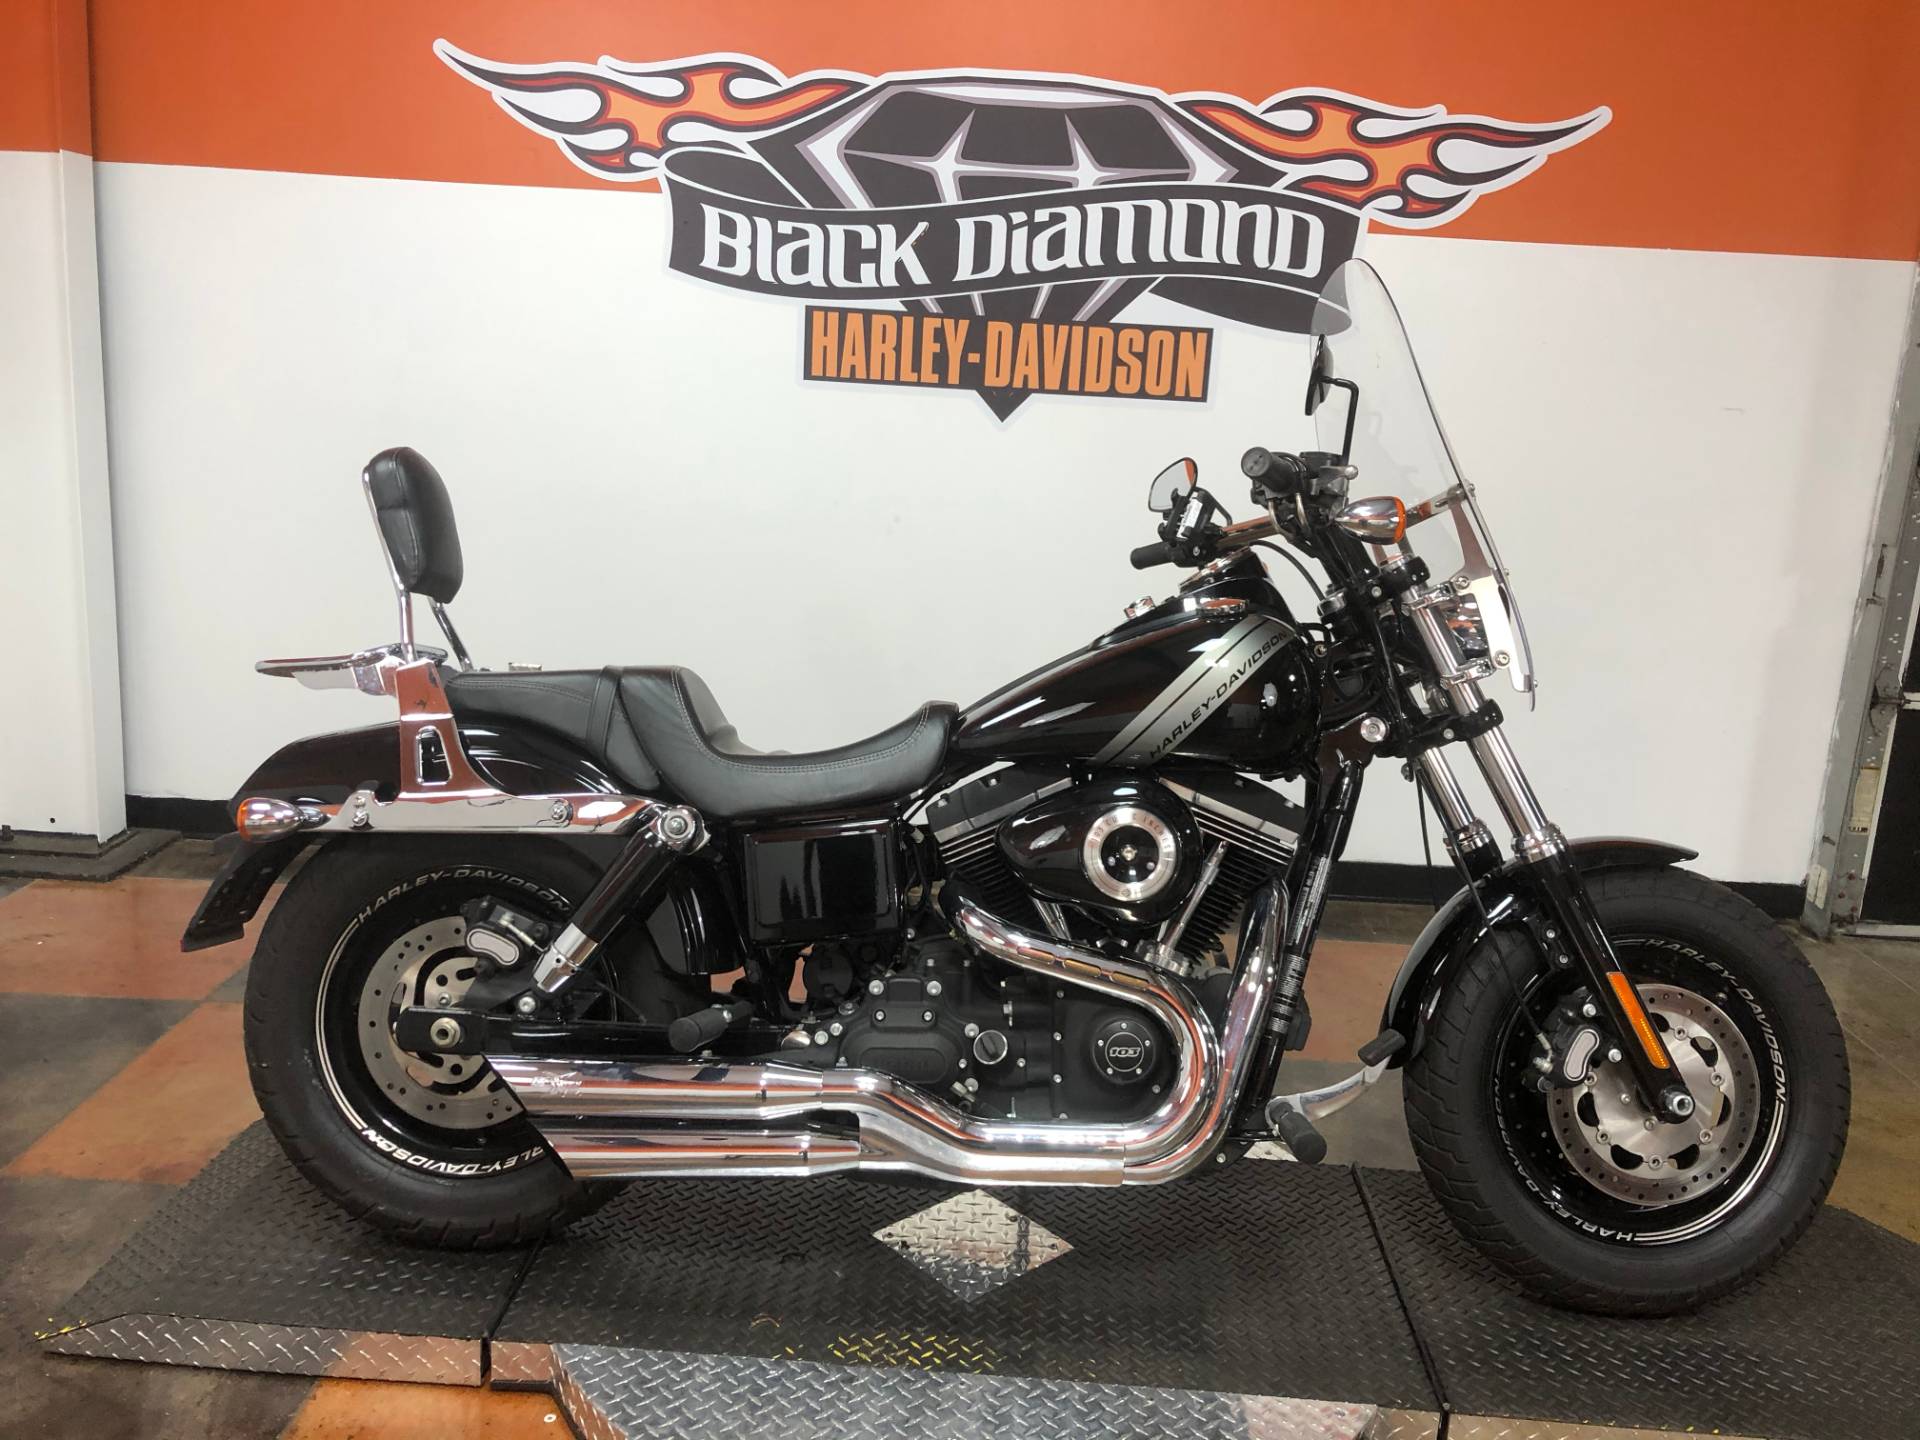 Used 2014 Harley Davidson Dyna Fat Bob Vivid Black Motorcycles In Marion Il U309970